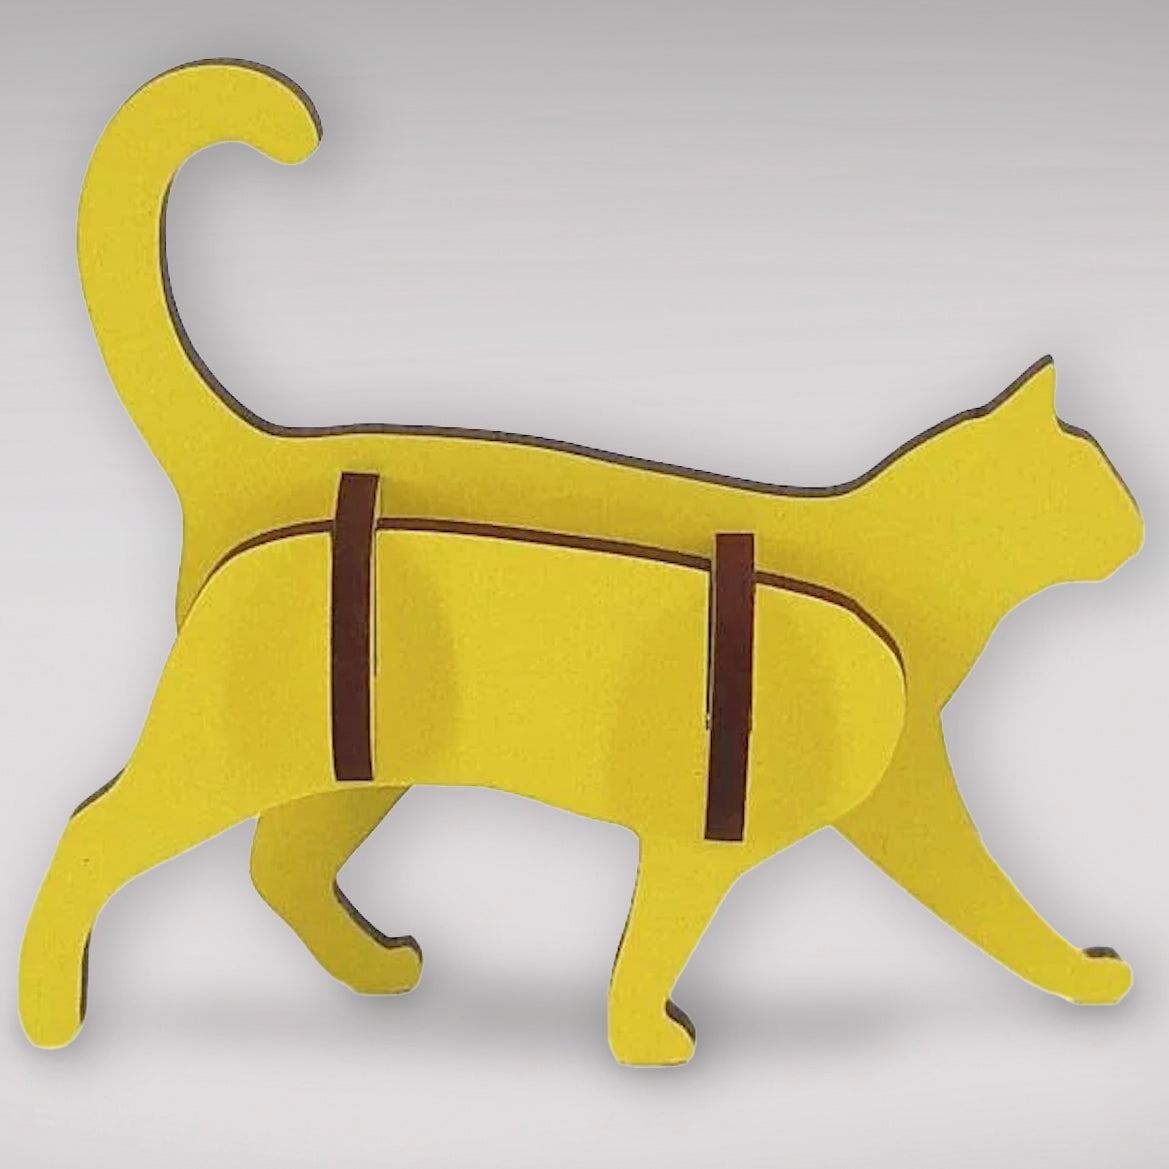 Flat-pack Kitset Wooden Model - Cat Walking - Yellow